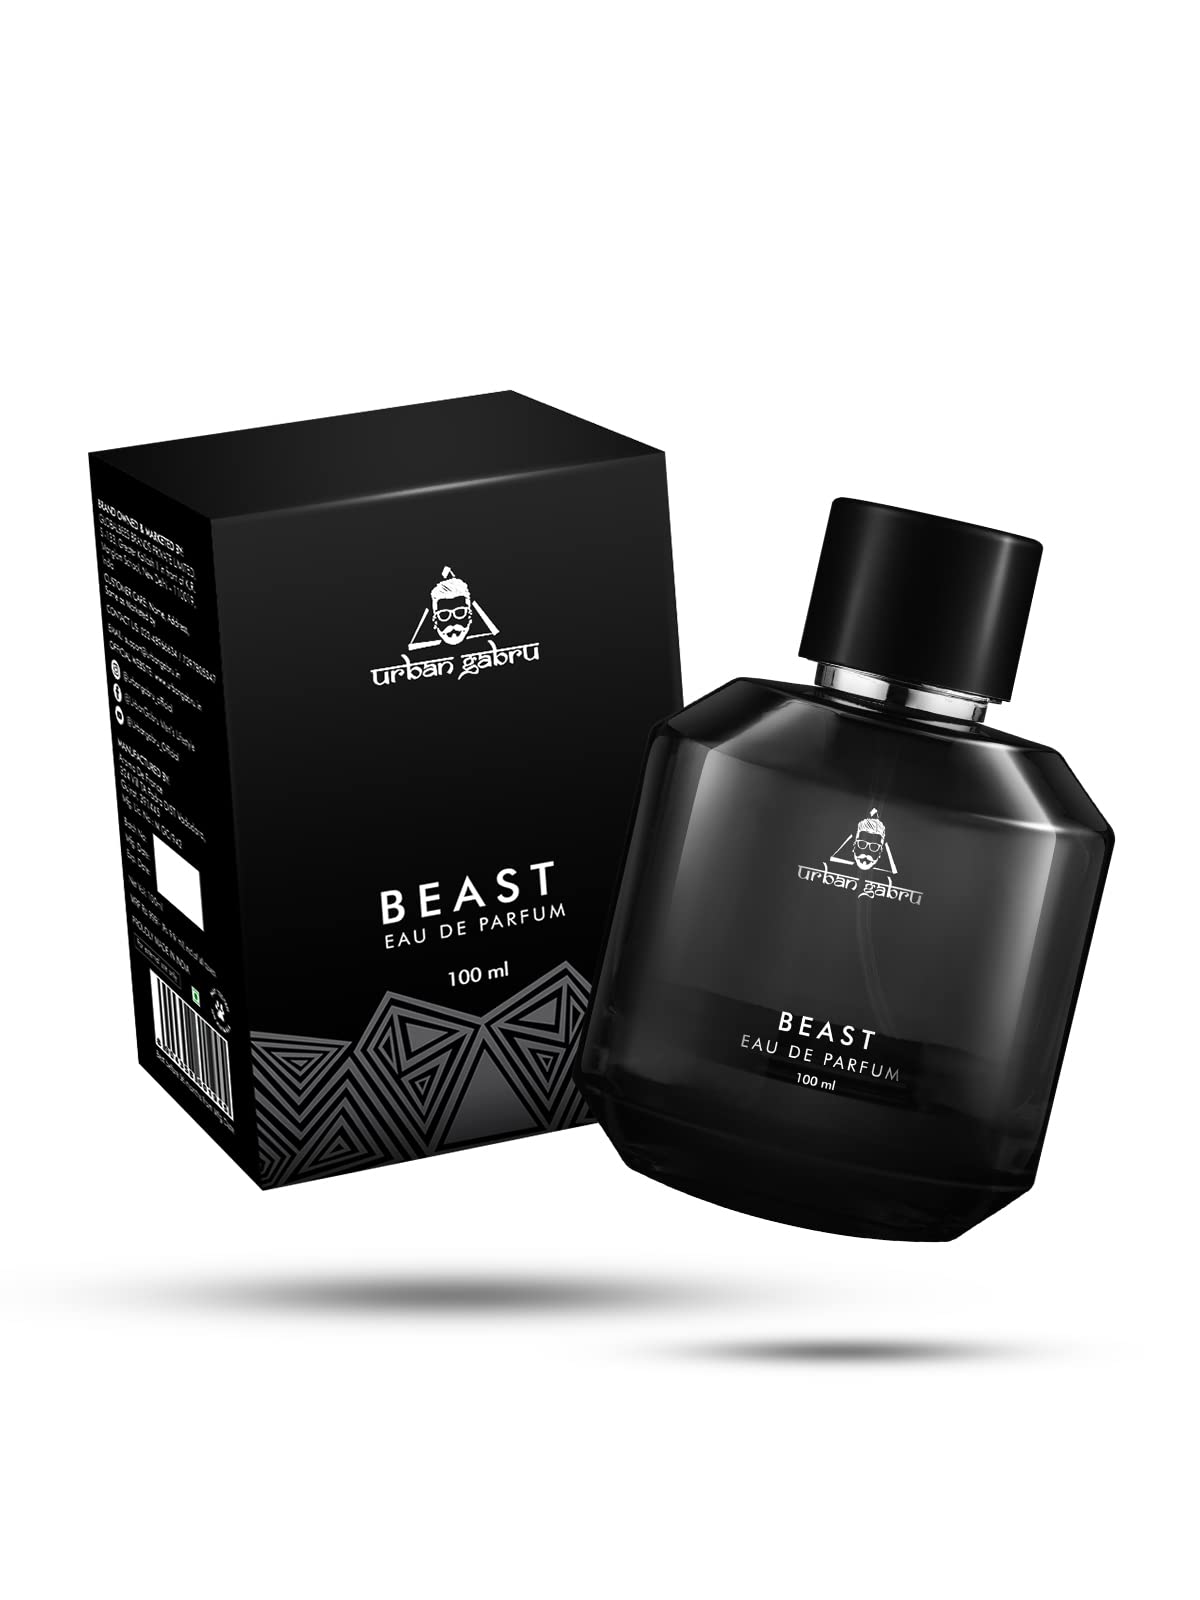 UrbanGabru Beast Perfume for Men (100 ml) - Eau De Parfum - Mild Long-lasting fragrance - Woody Aromati